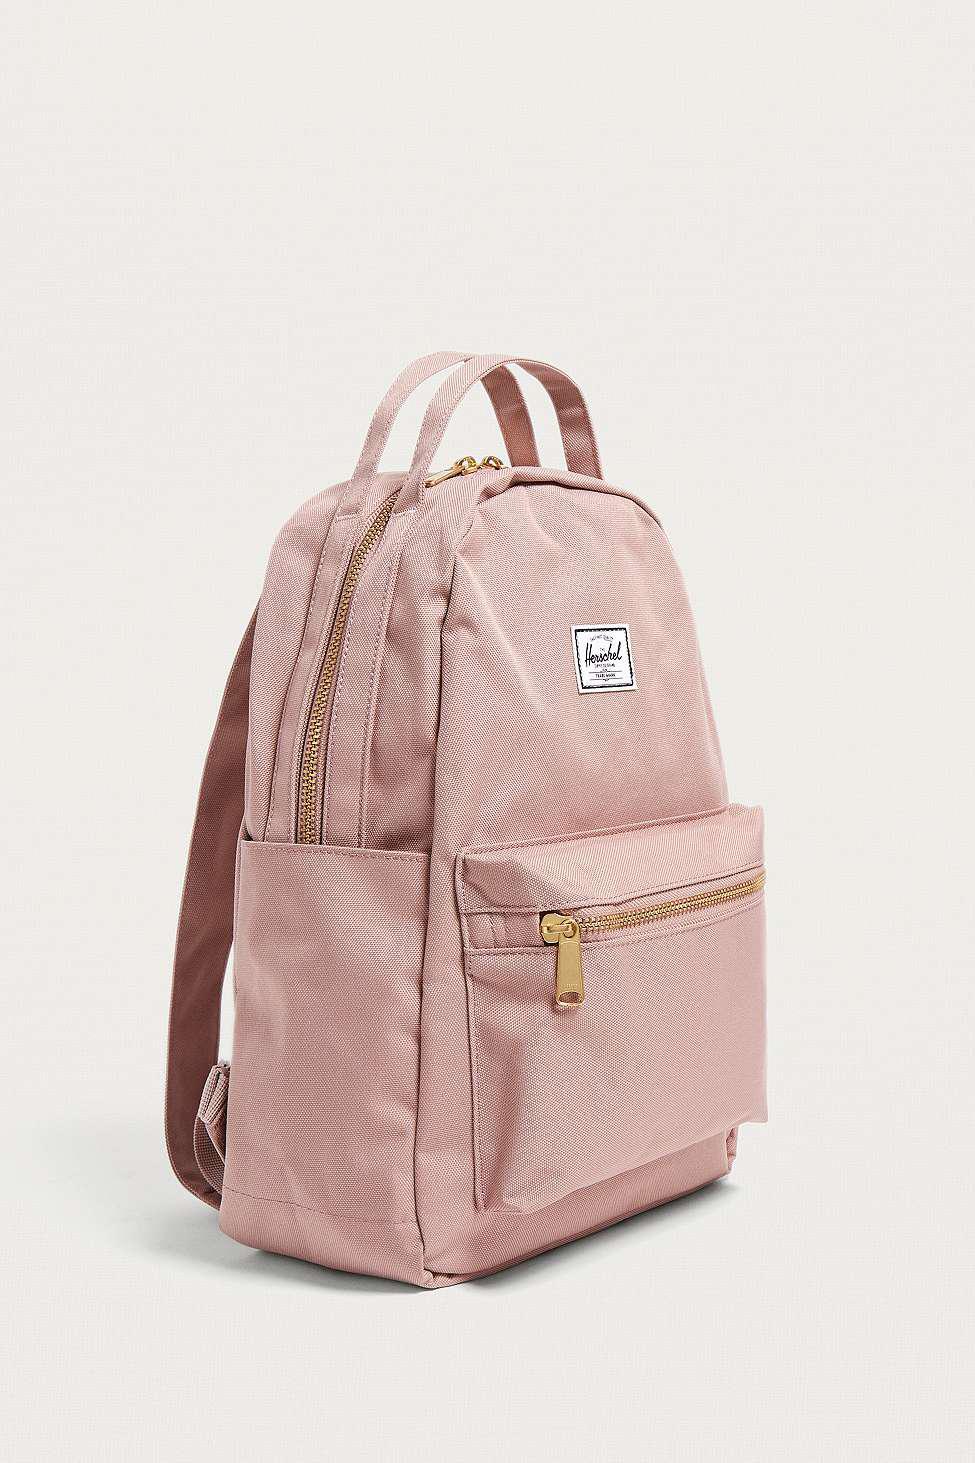 Herschel Supply Co. Synthetic Nova Mini Backpack in Pink for Men - Lyst